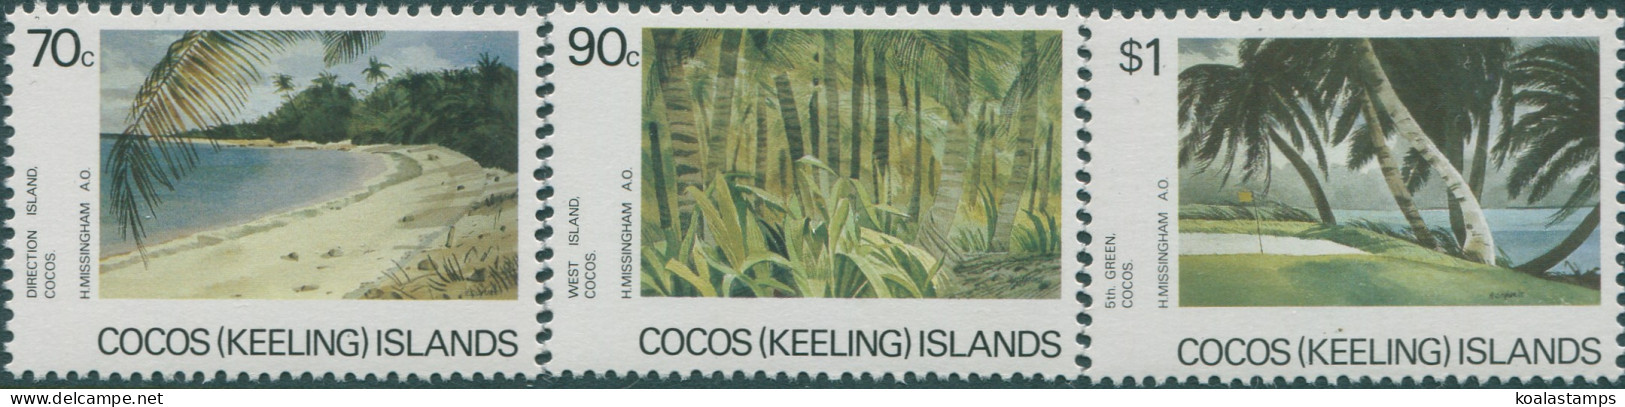 Cocos Islands 1987 SG162-164 Scenes Set MNH - Kokosinseln (Keeling Islands)